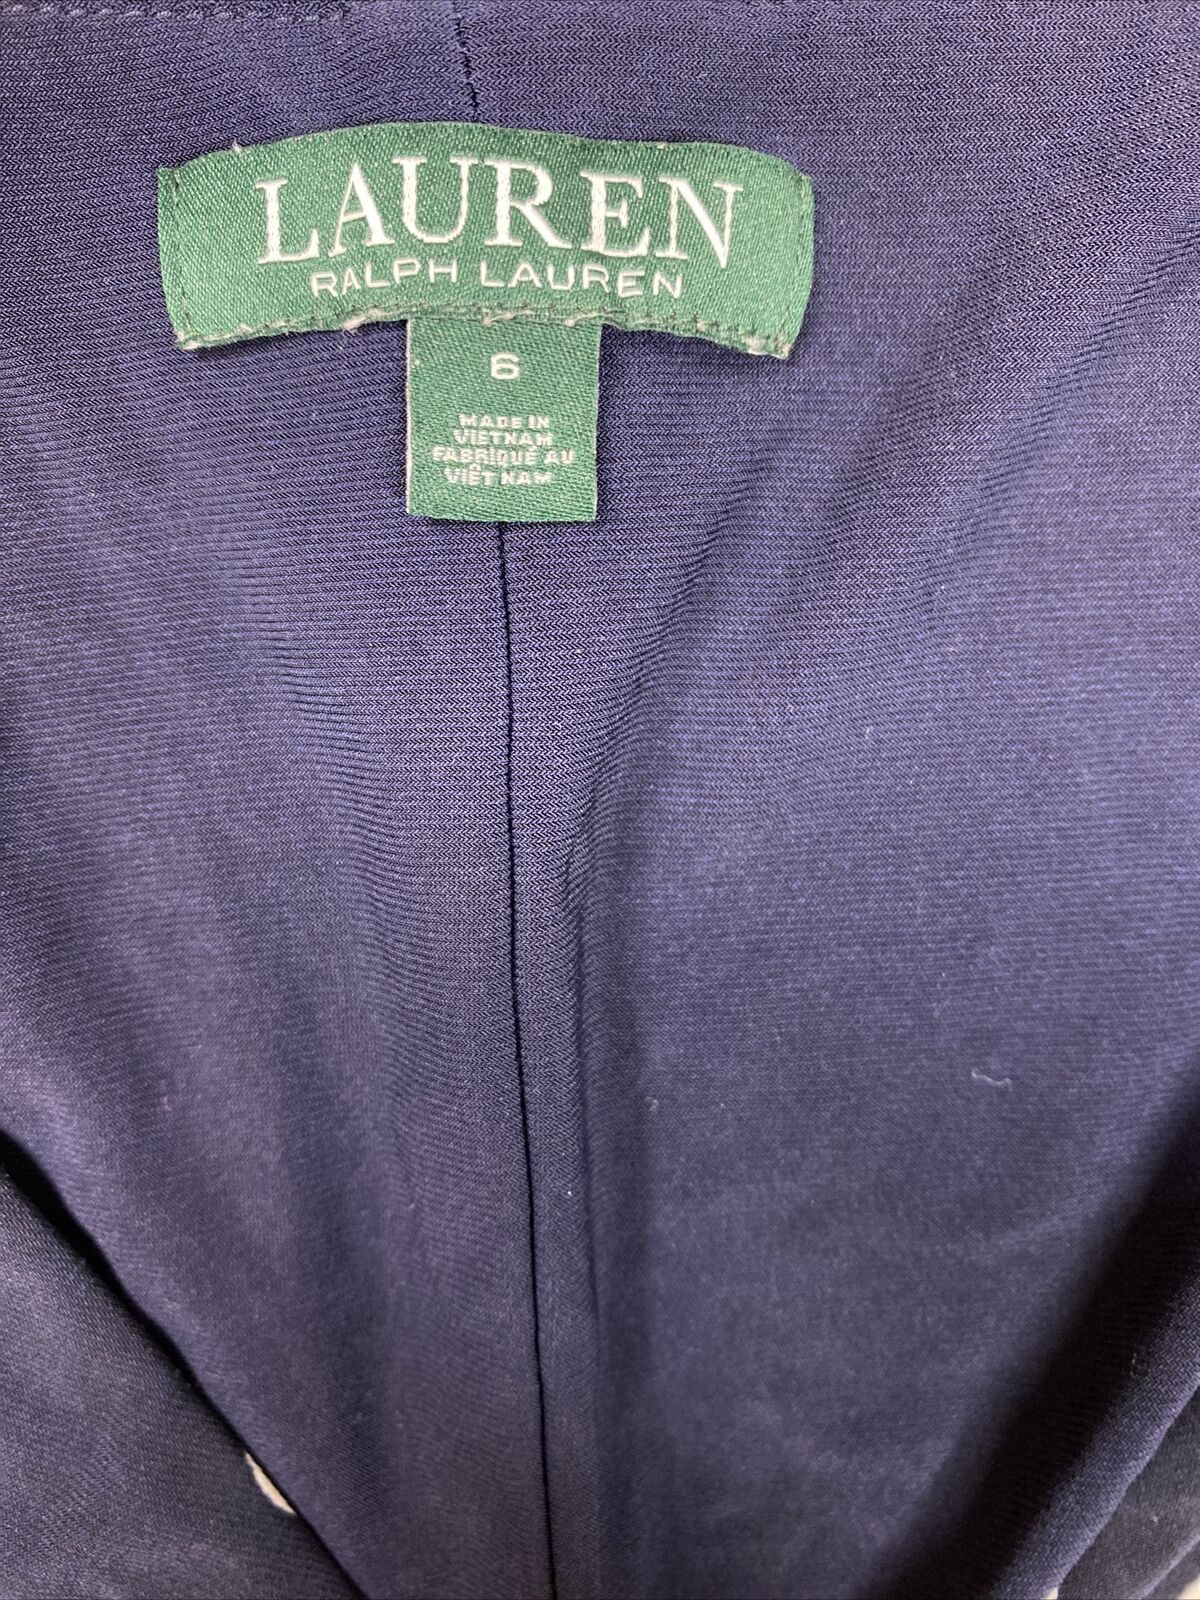 LAUREN Ralph Lauren Women's Navy Blue Floral 3/4 Sleeve Wrap Dress - 6